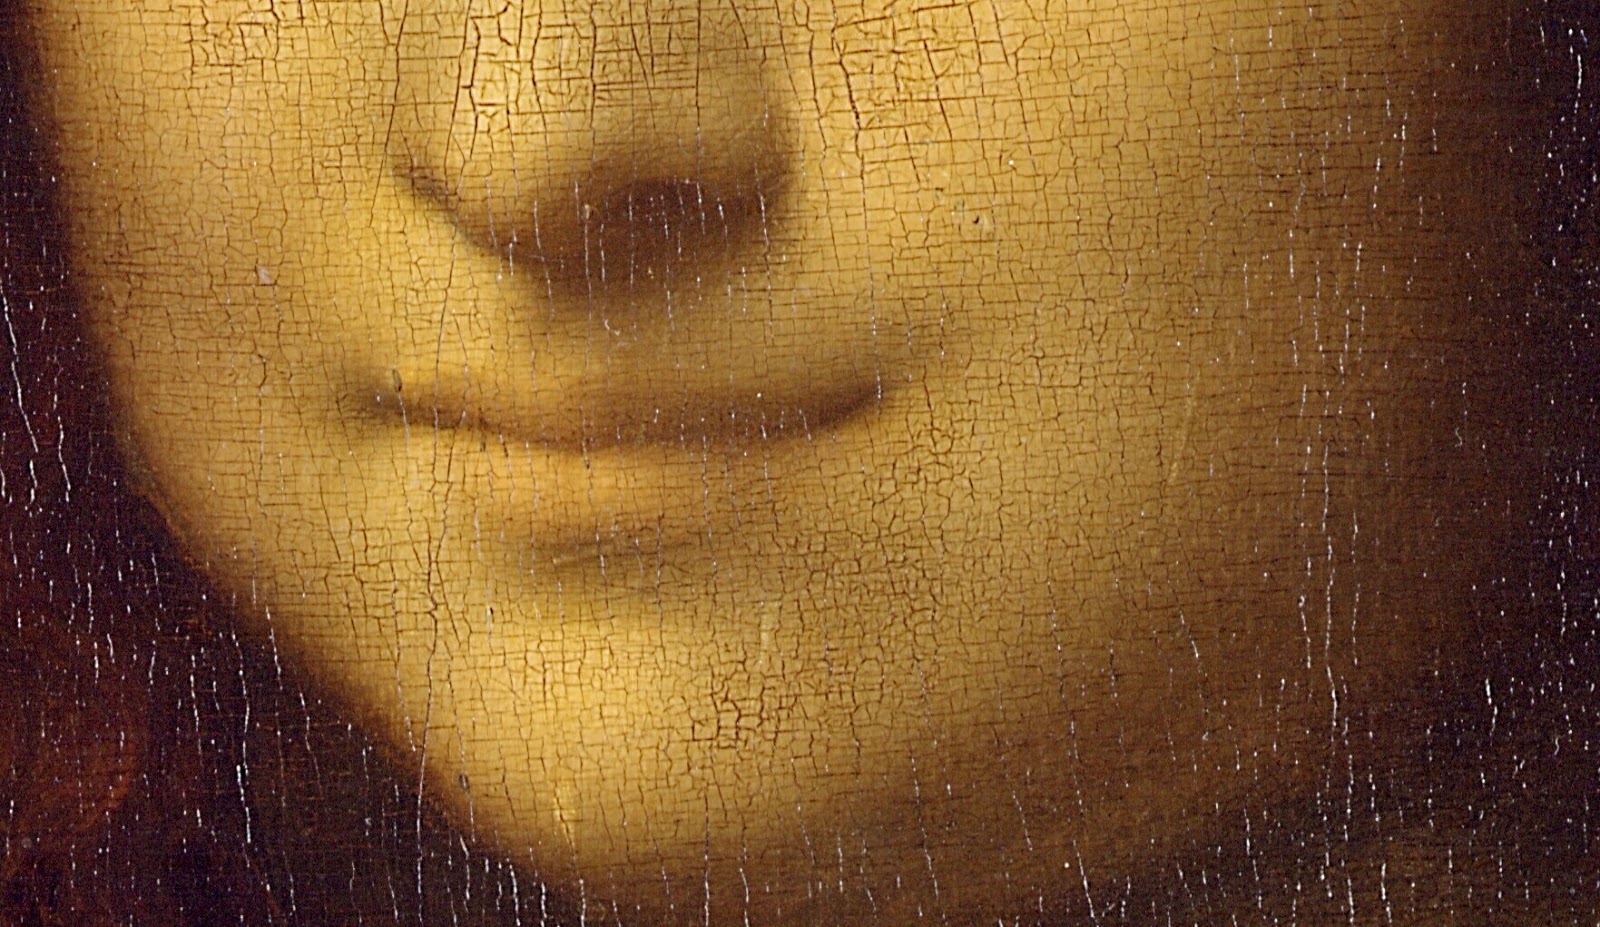 Leonardo+da+Vinci-1452-1519 (980).jpg